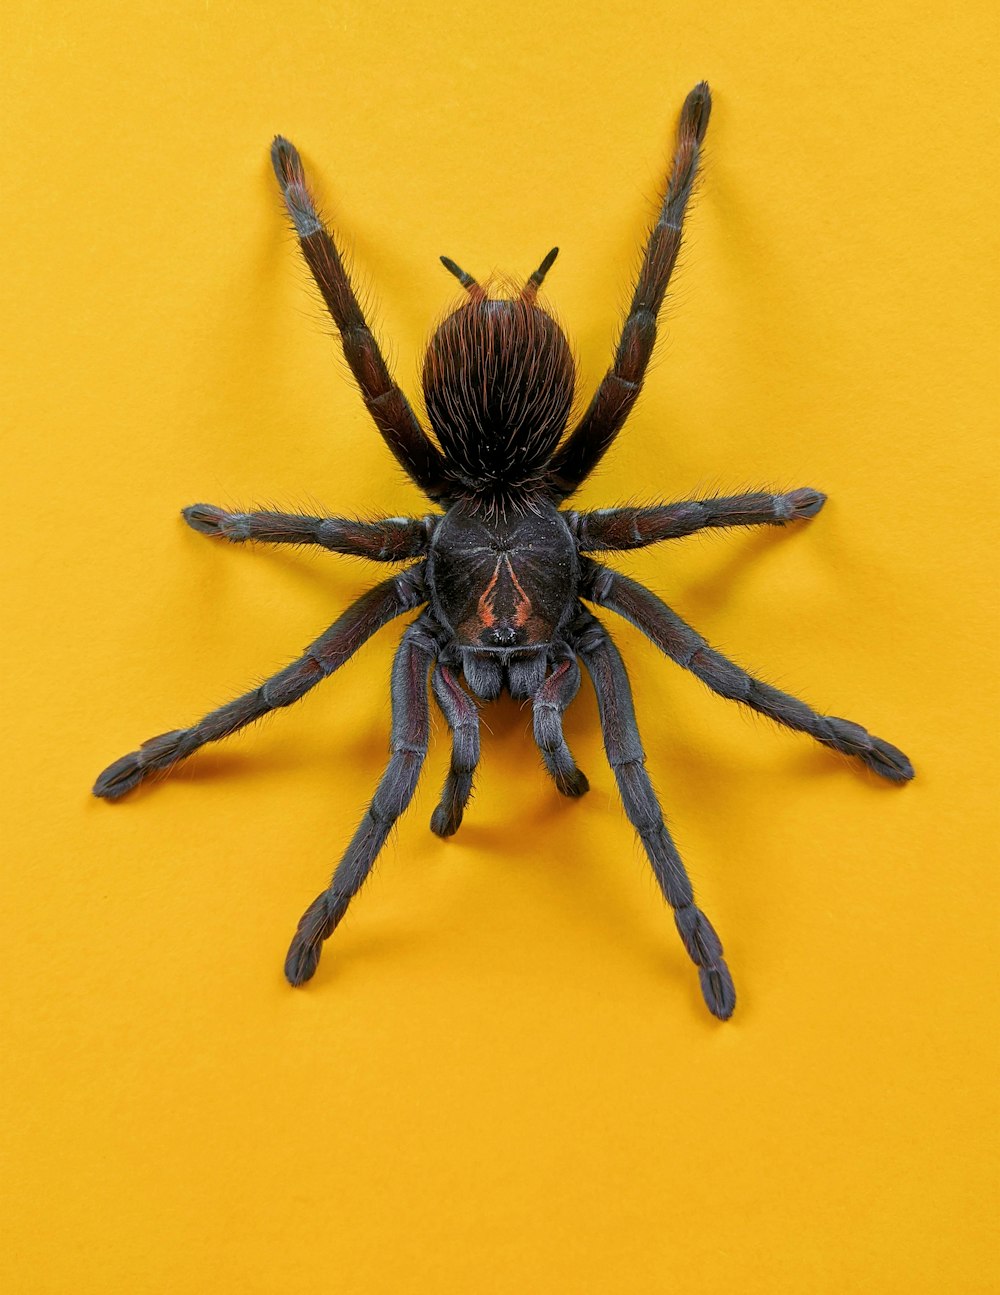 350+ [HQ] Spider Pictures | Download Free Images on Unsplash